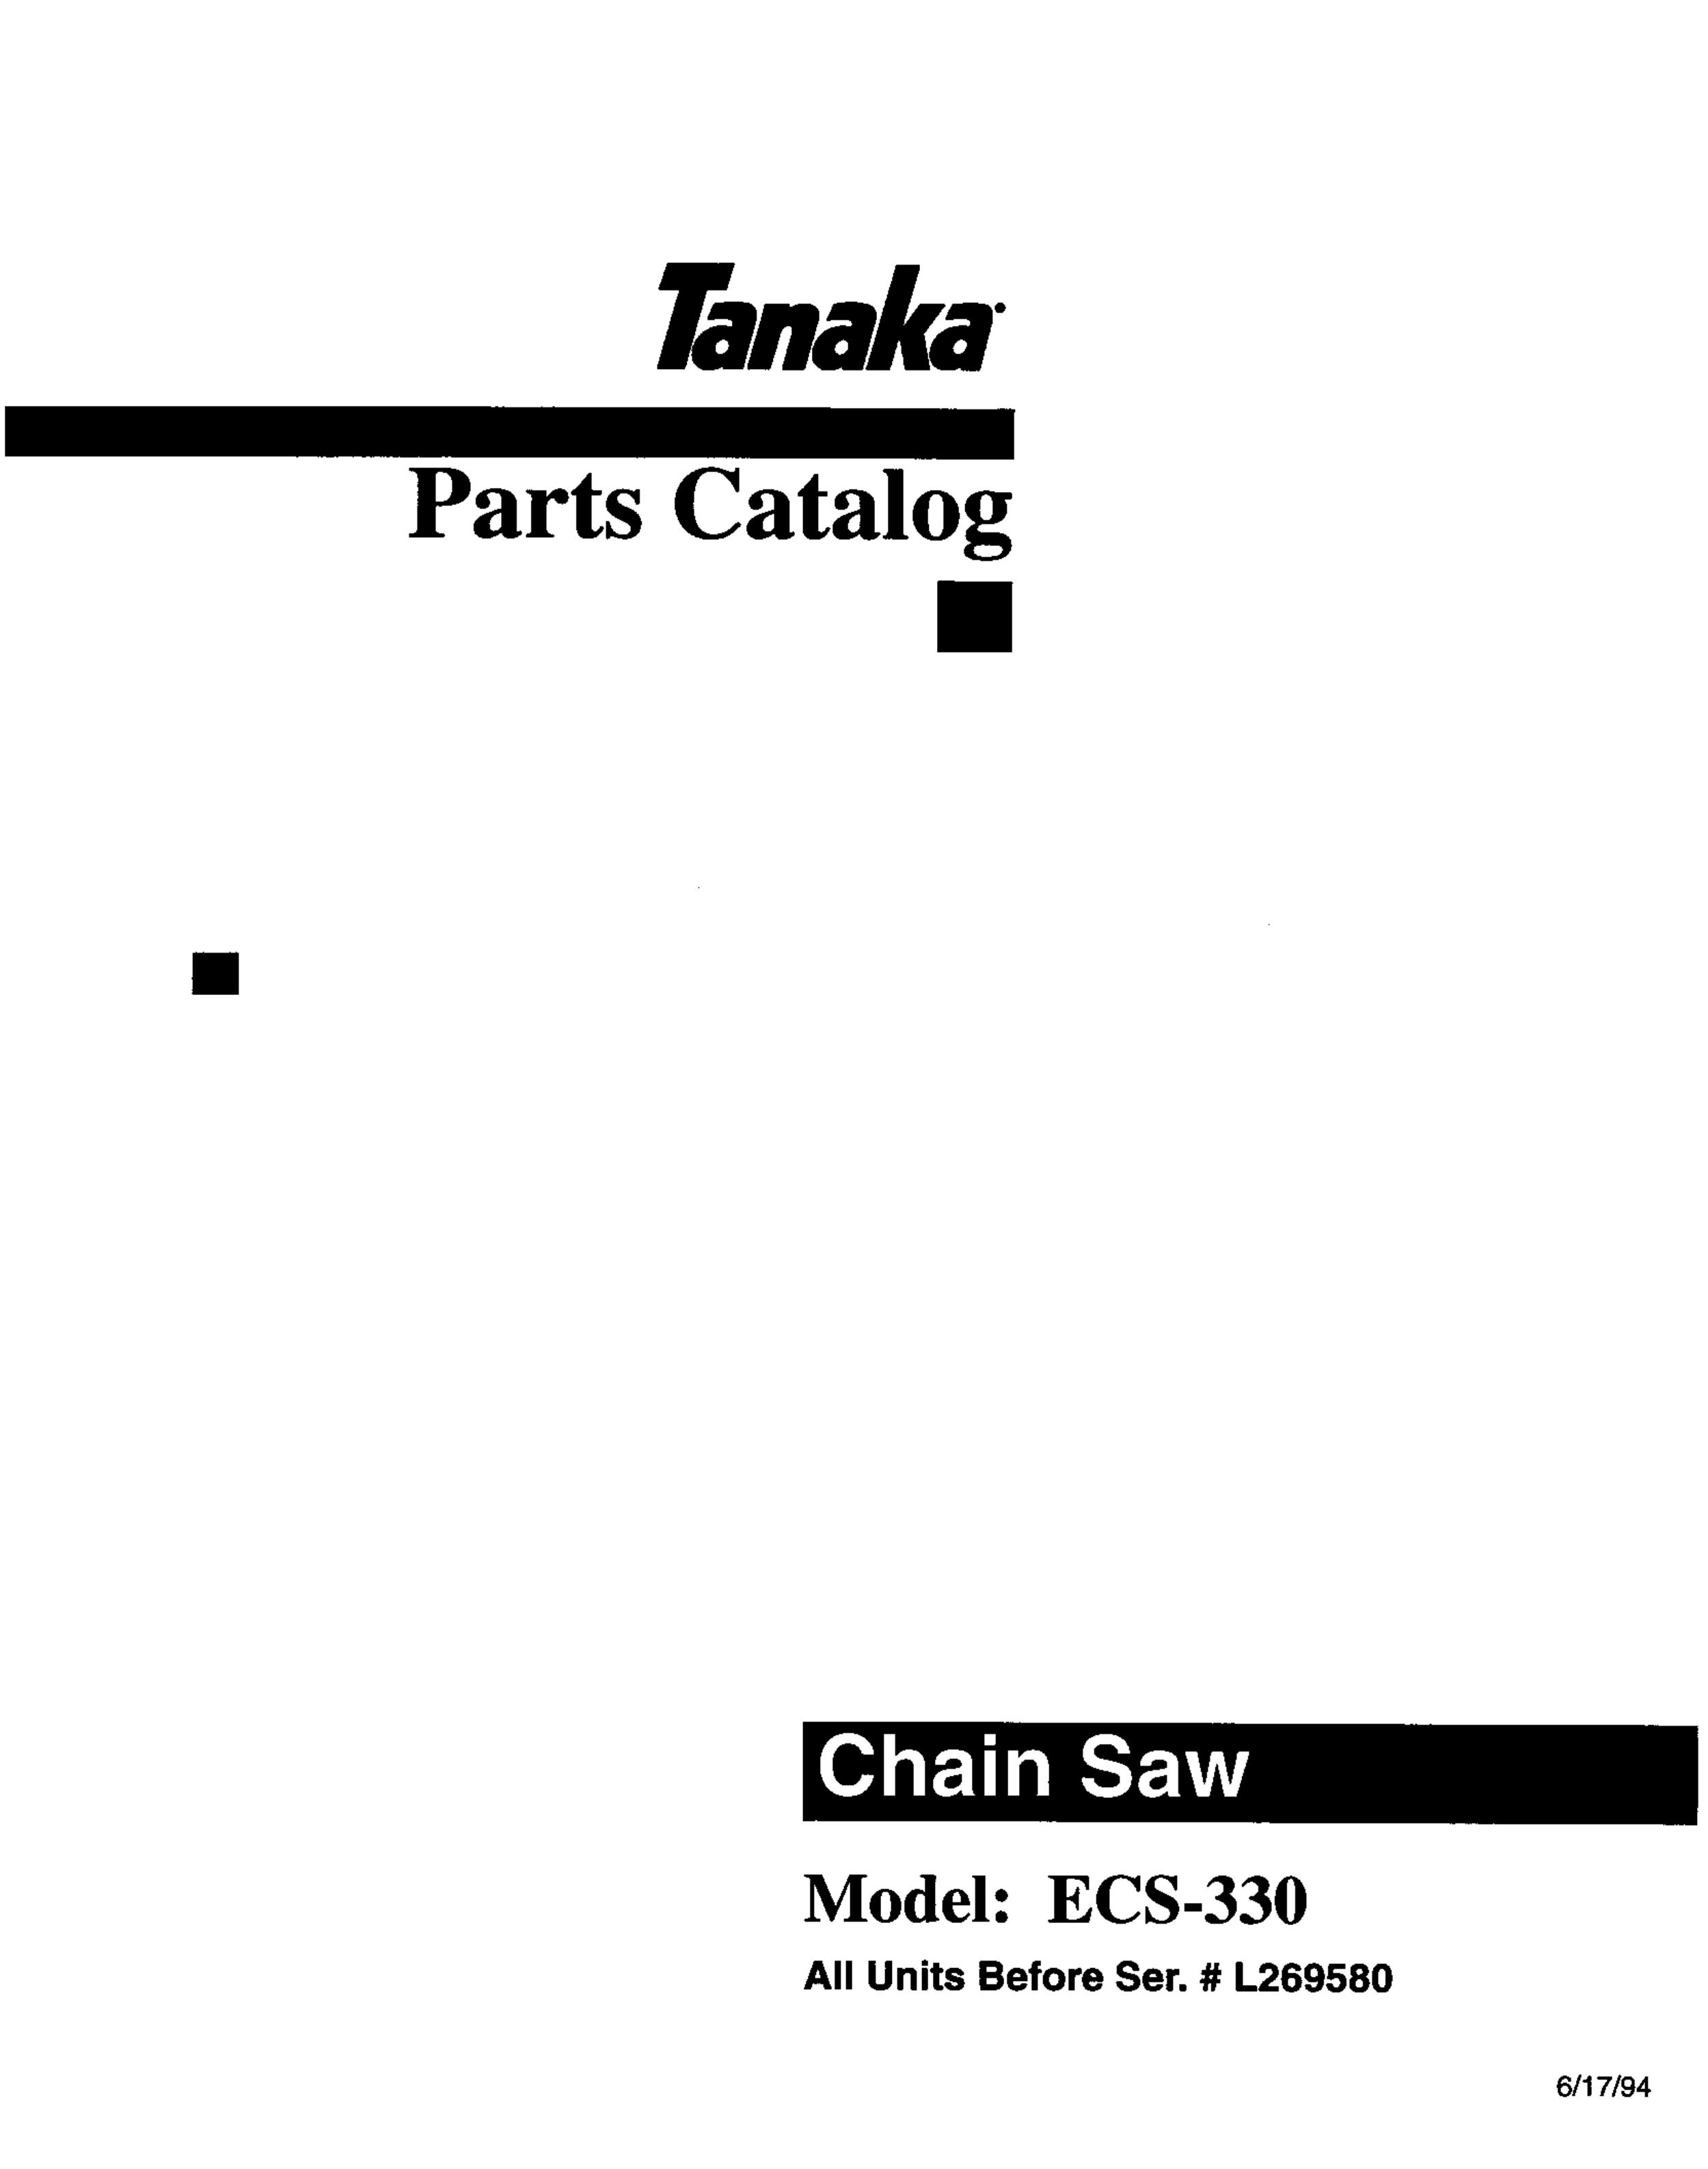 Tanaka ECS-330 Chainsaw User Manual